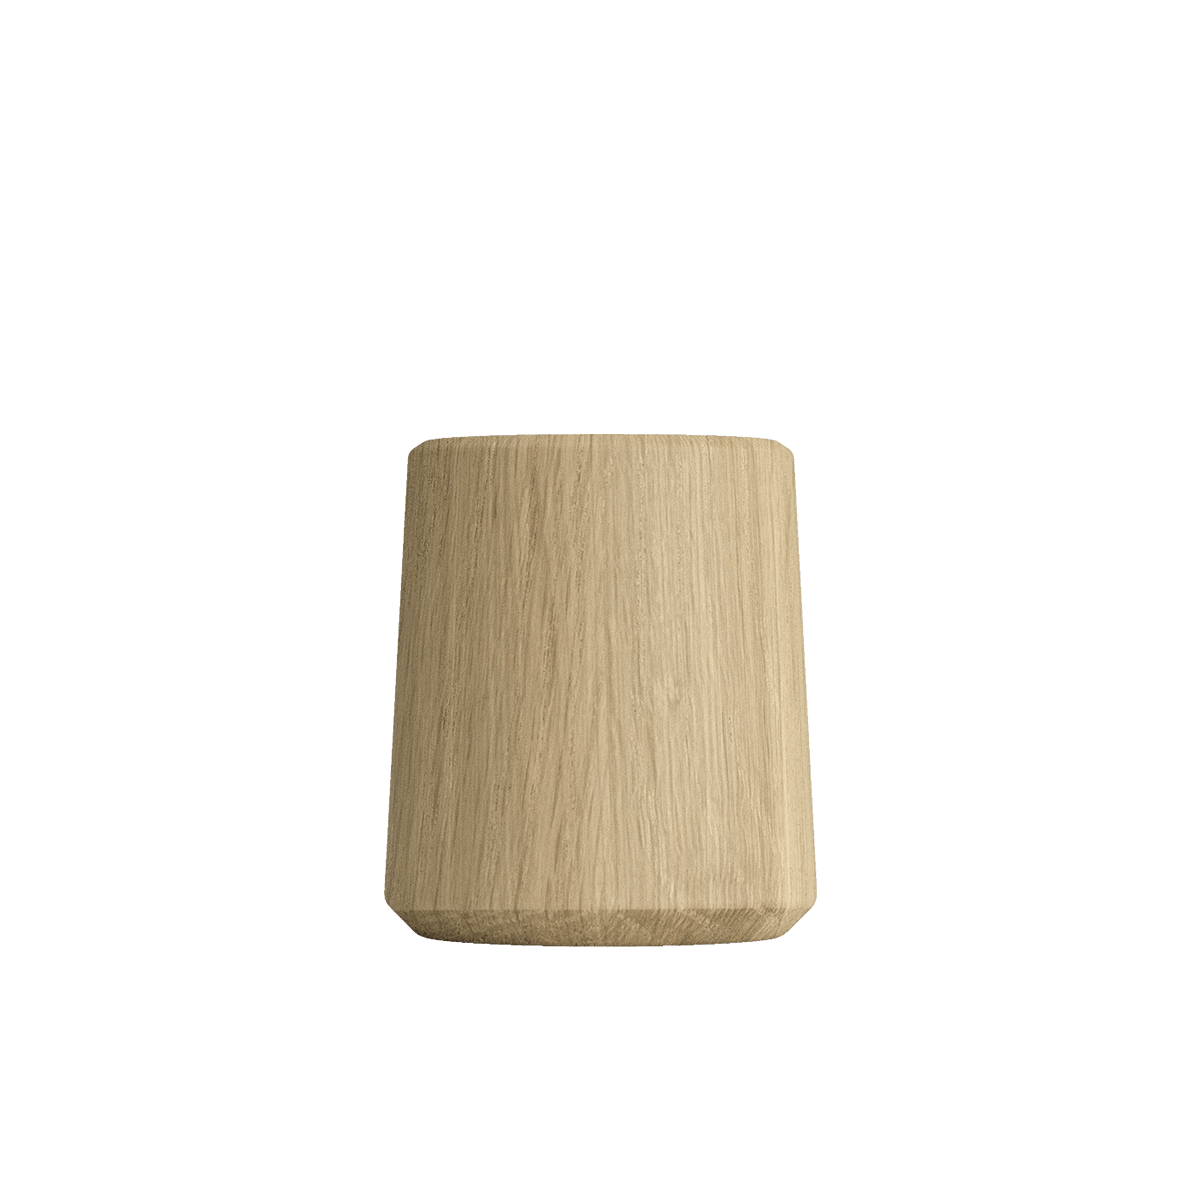 variant_600208% | Ambience - Oslo base - Natural Oak 8 | SACKit